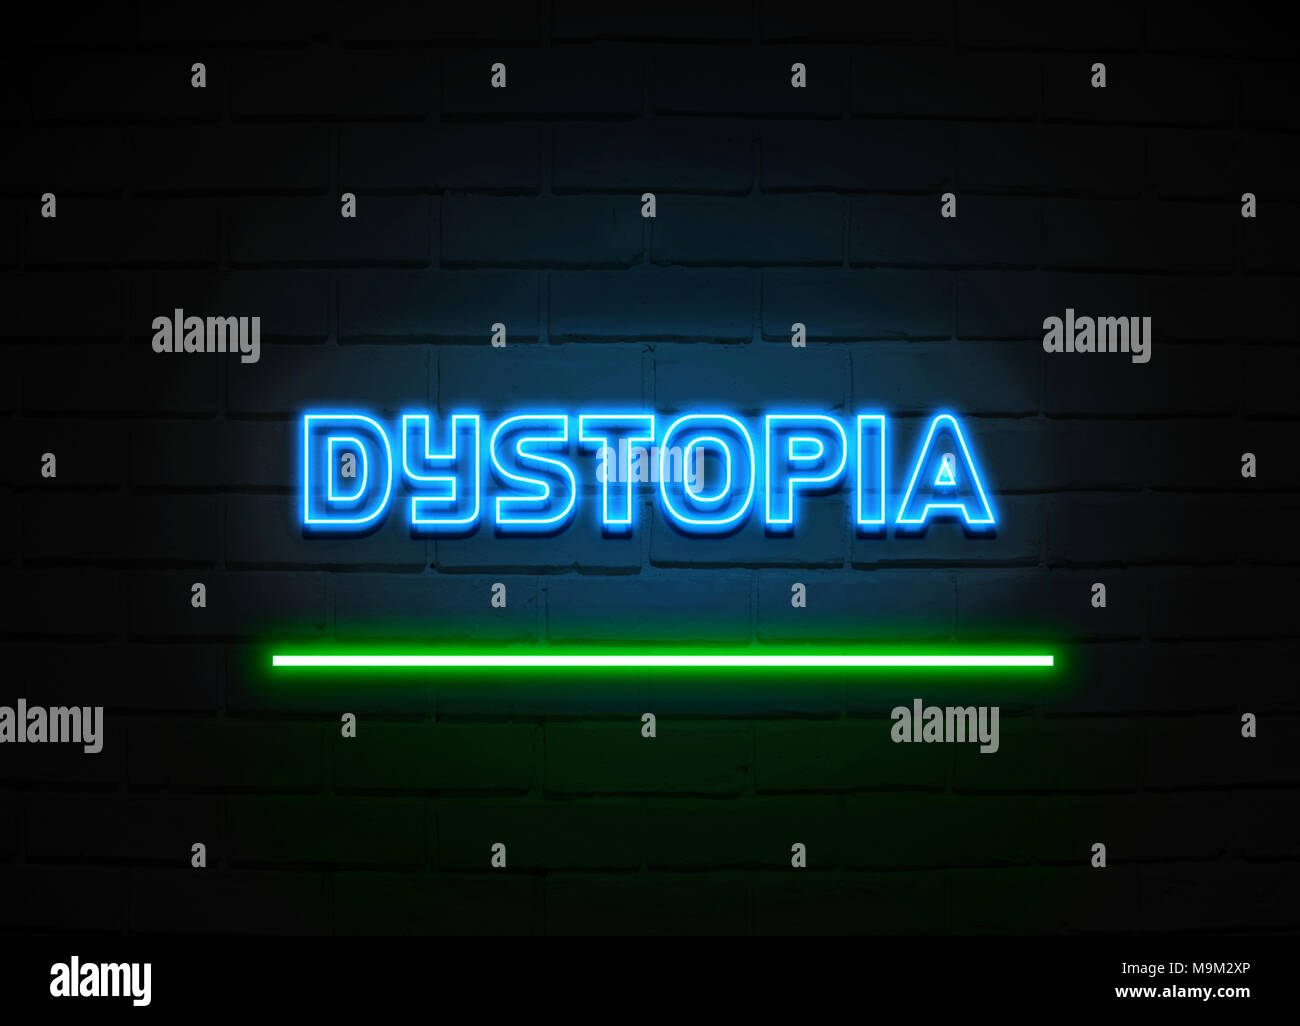 Dystopia Leuchtreklame - glühende Leuchtreklame auf brickwall Wand - 3D-Royalty Free Stock Illustration dargestellt. Stockfoto